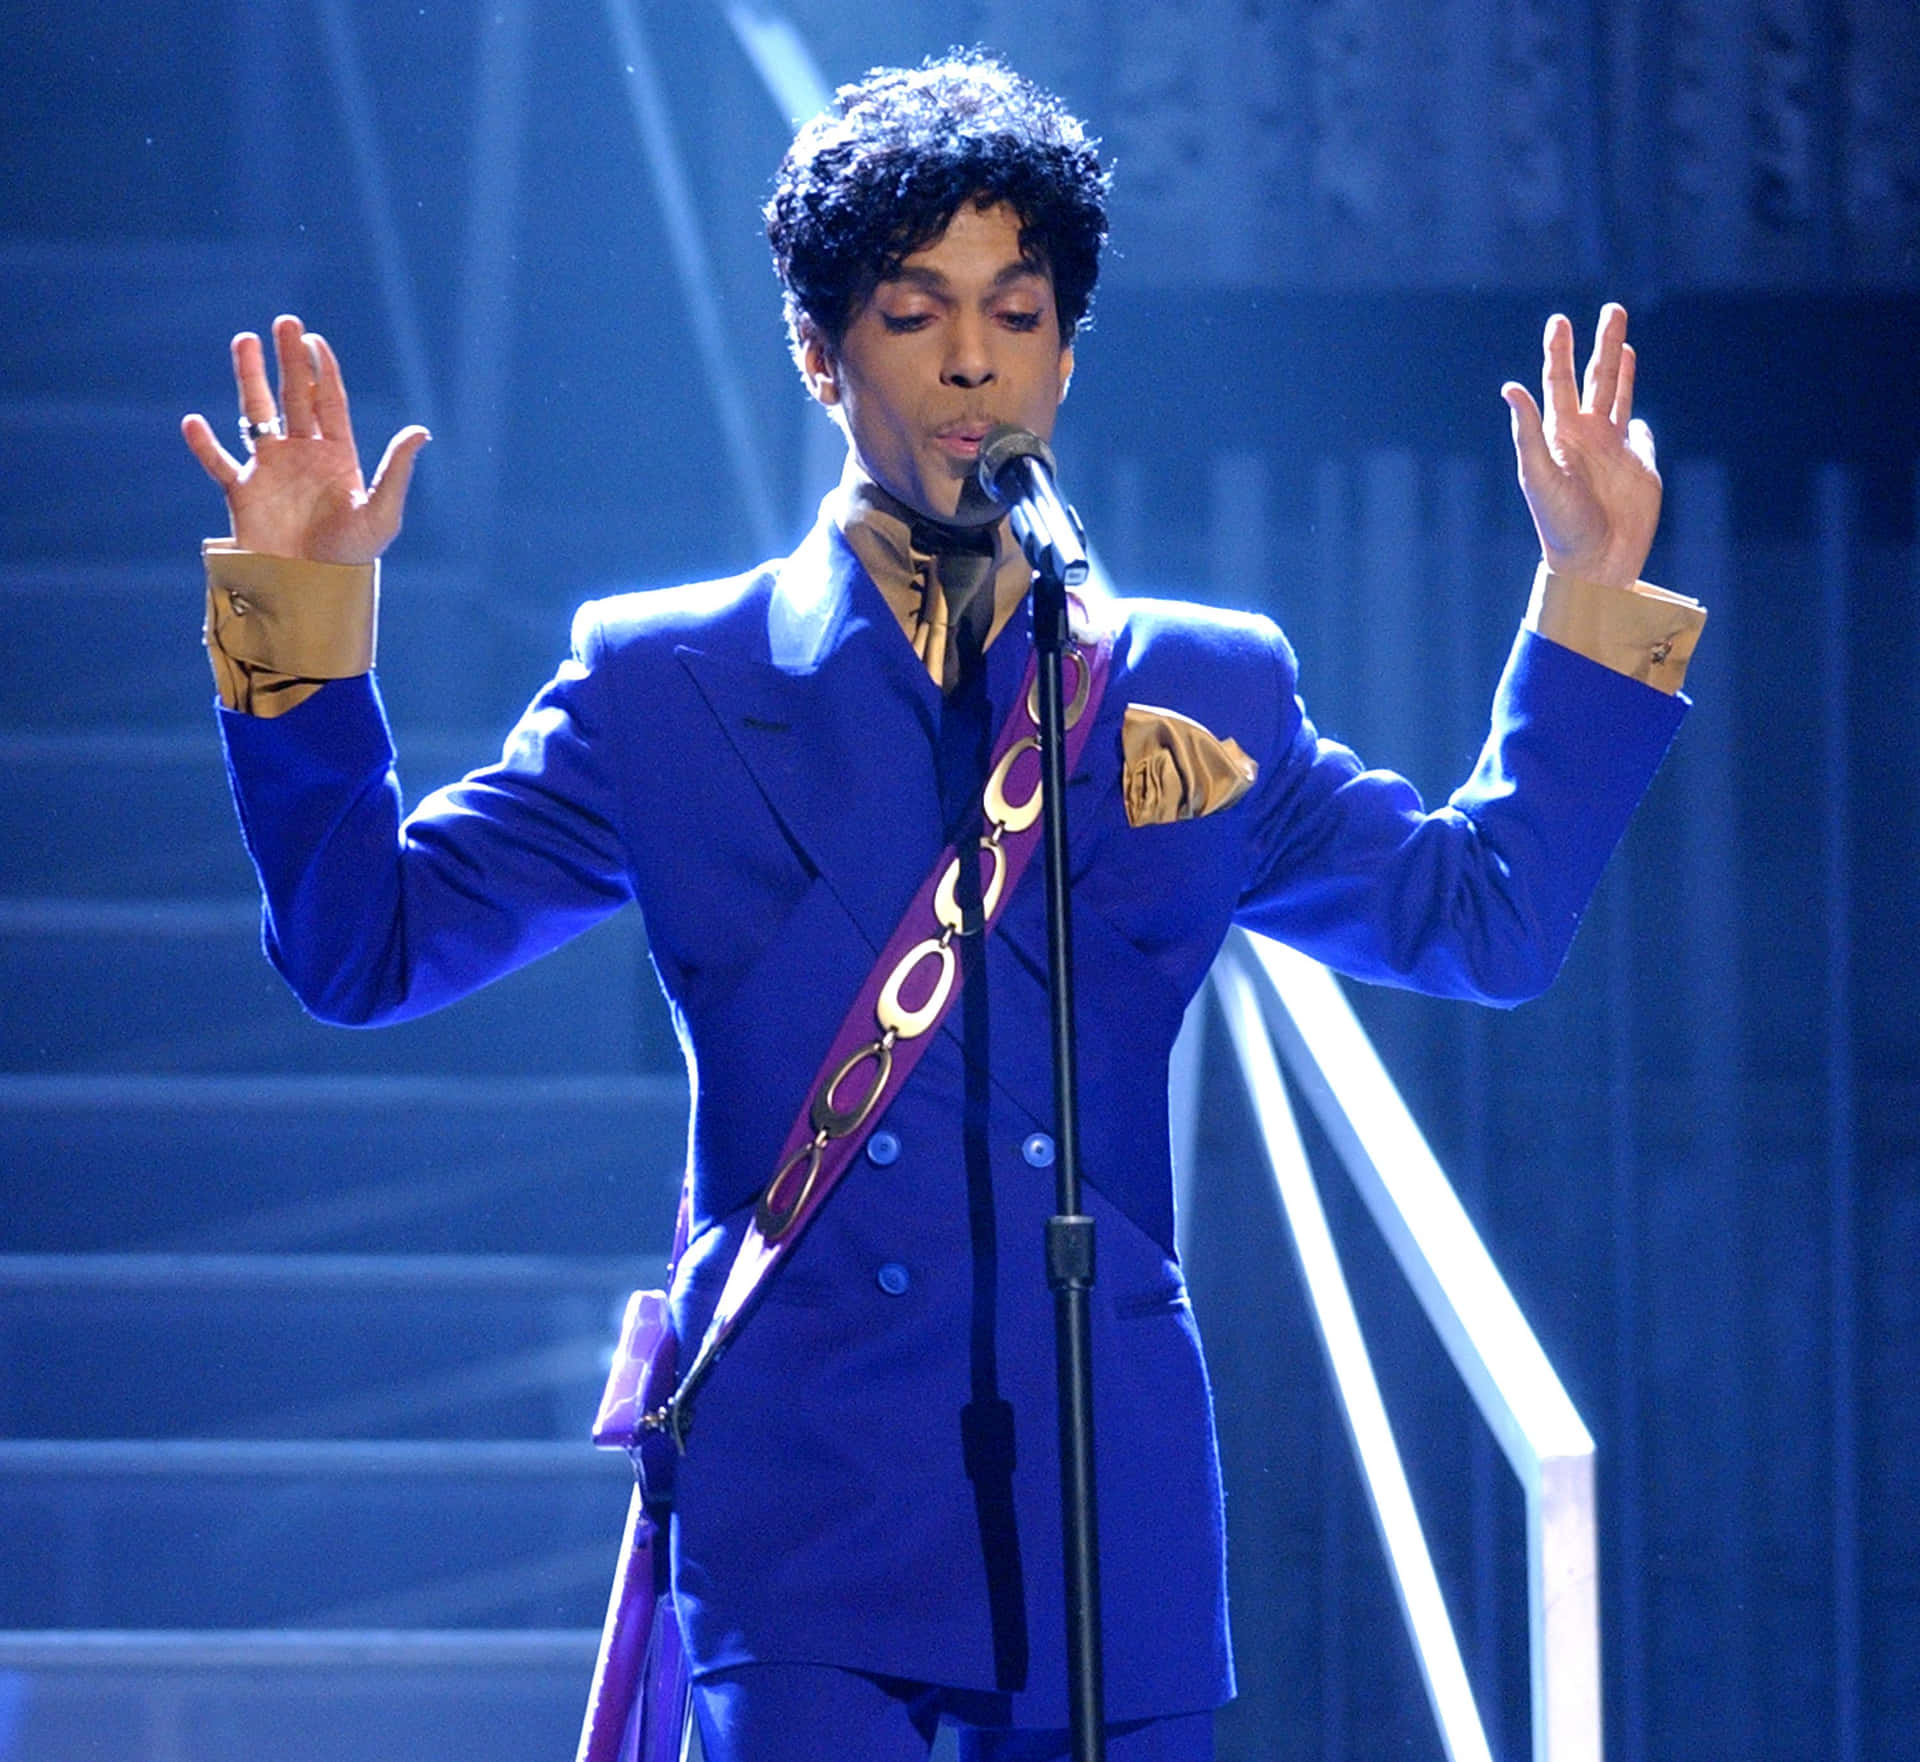 Ogênio Musical, Prince.